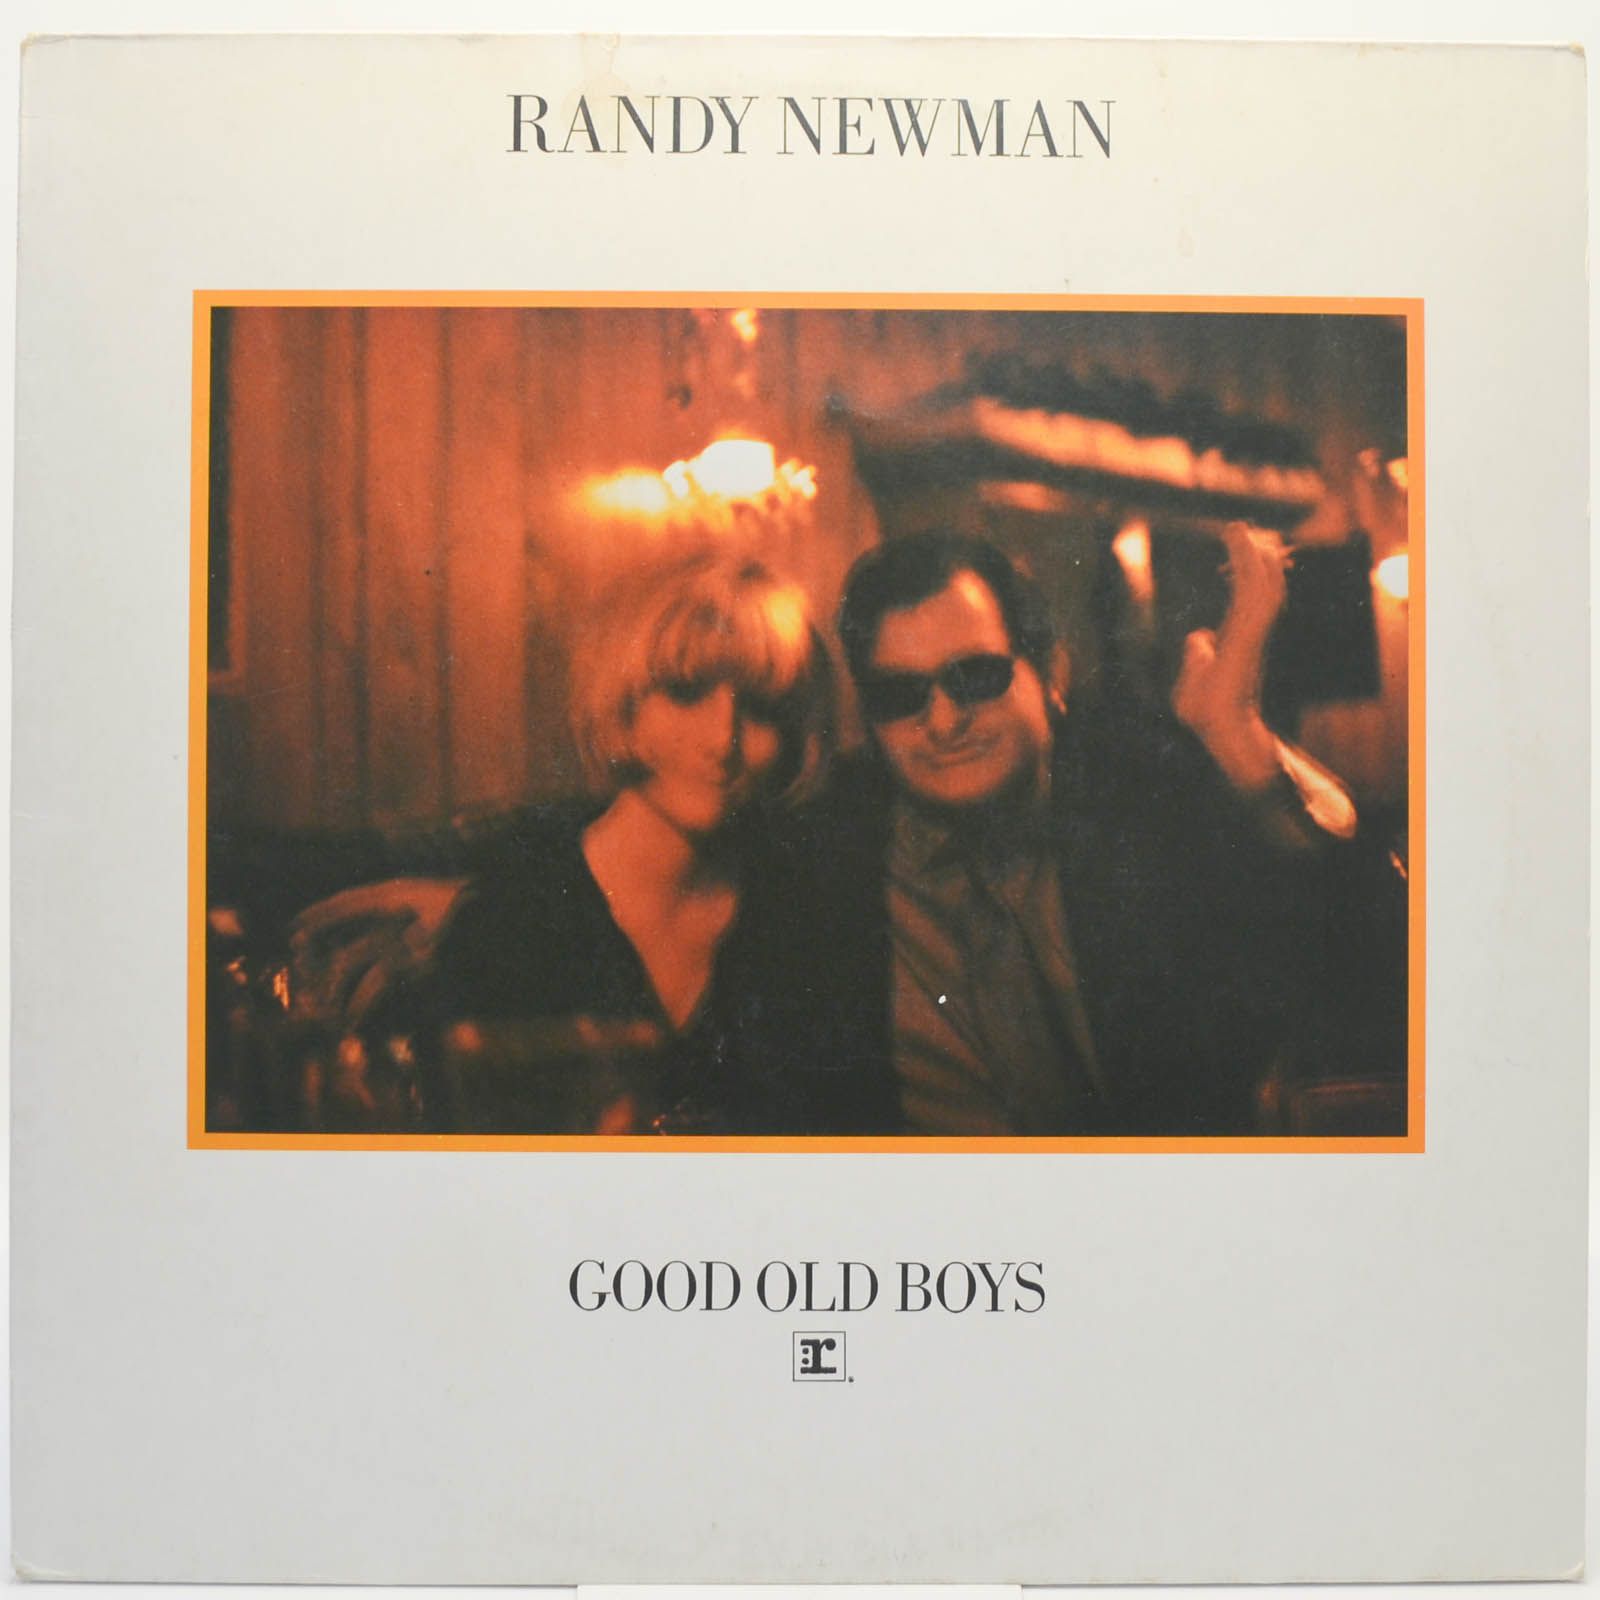 Randy Newman — Good Old Boys, 1974